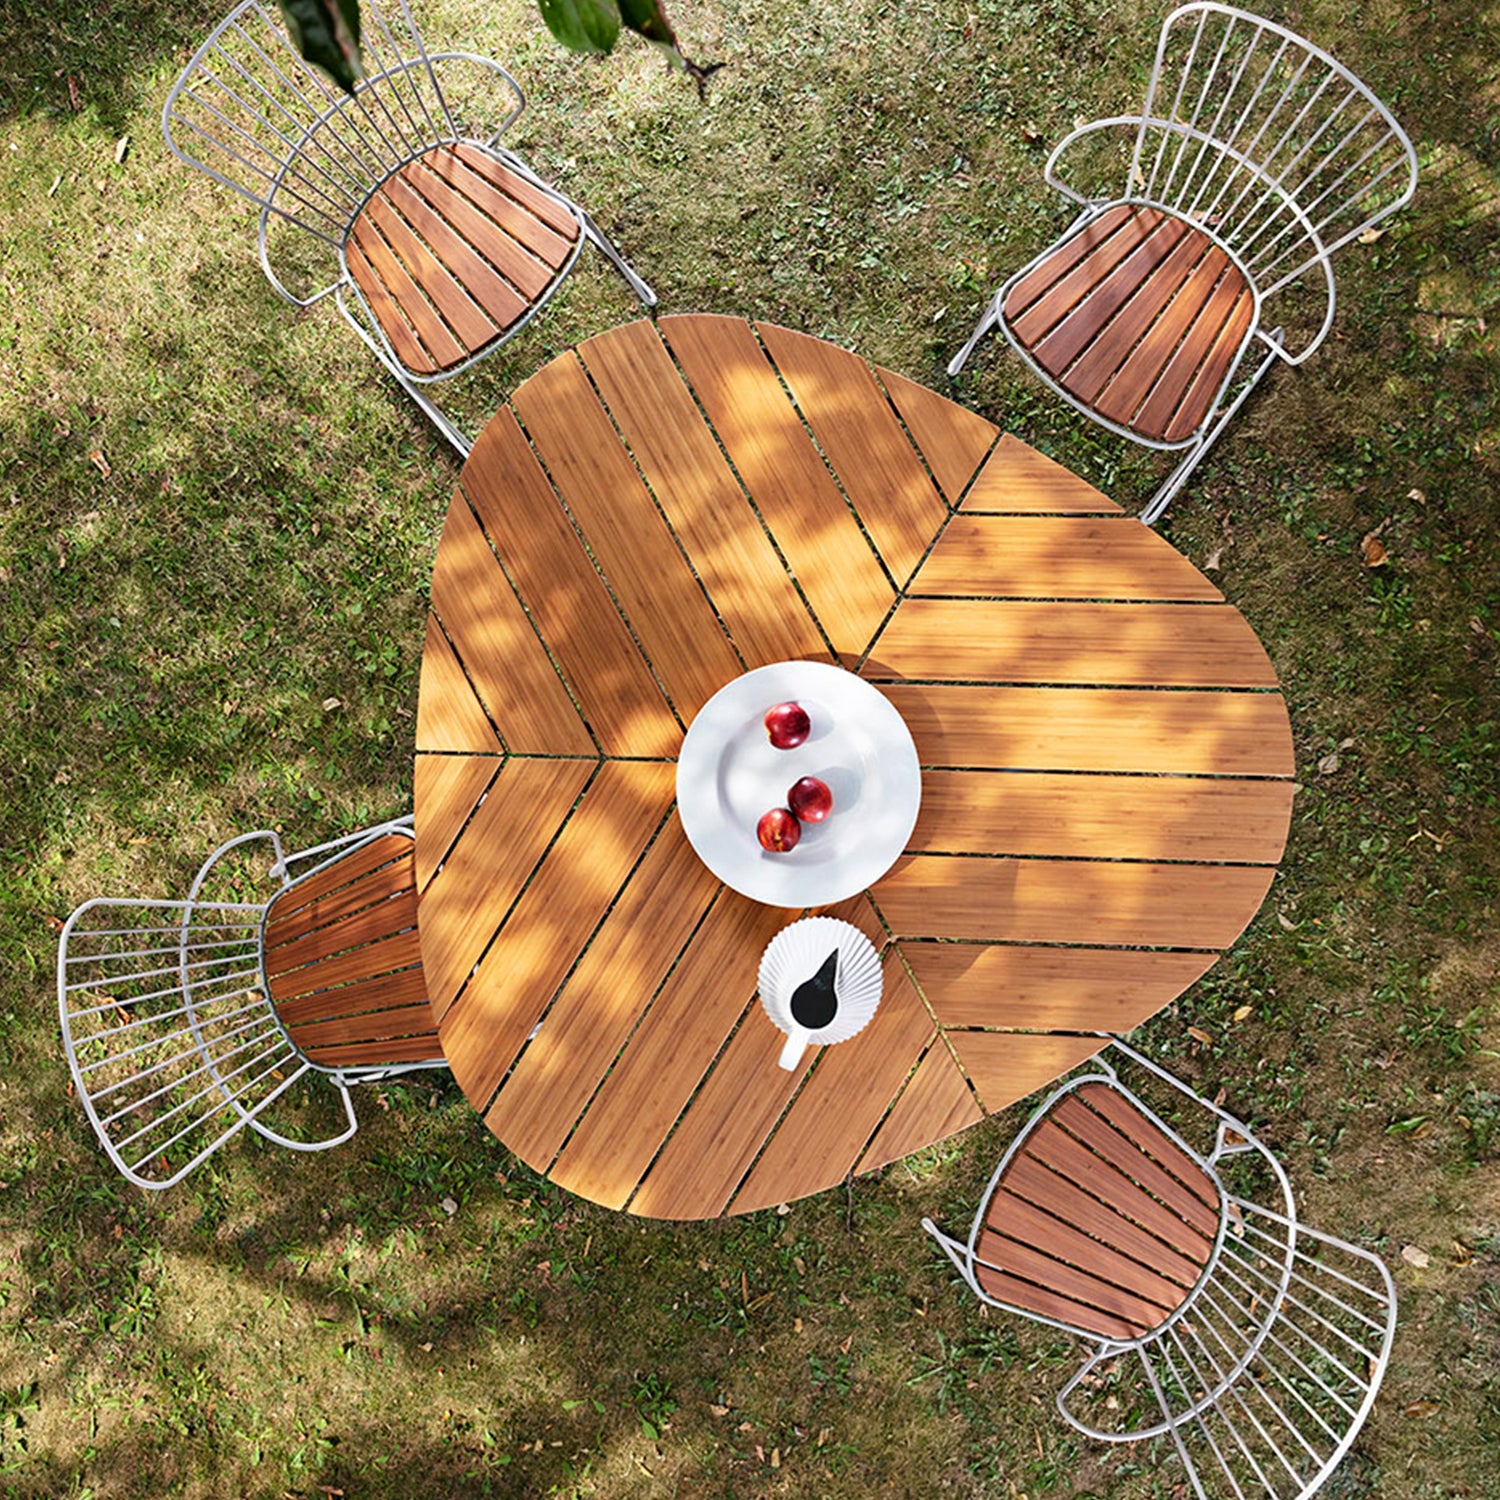 Leaf Dining Table - The Design Choice